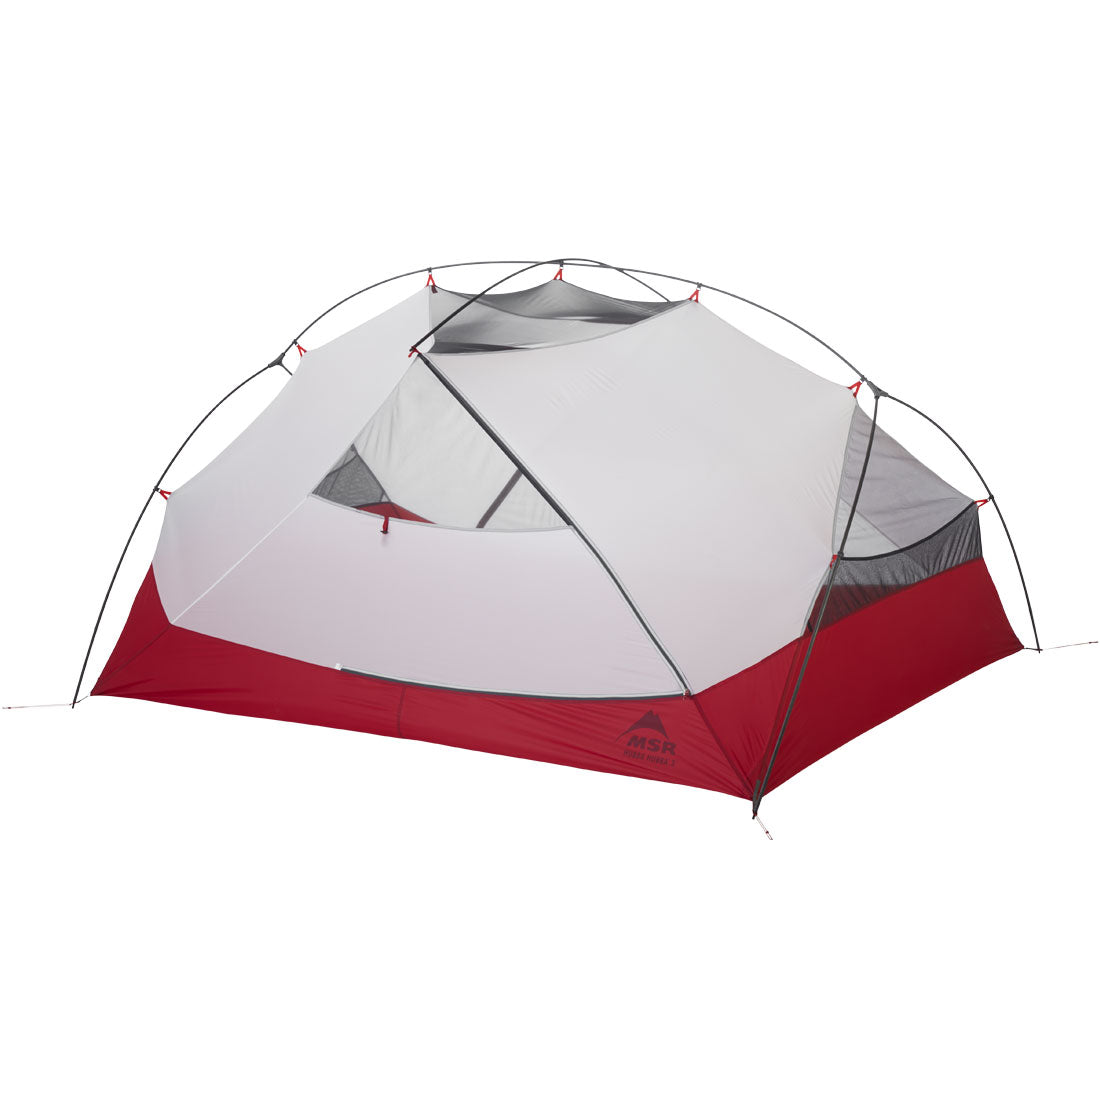 MSR (Cascade Designs) Hubba Hubba 3P Backpacking Tent